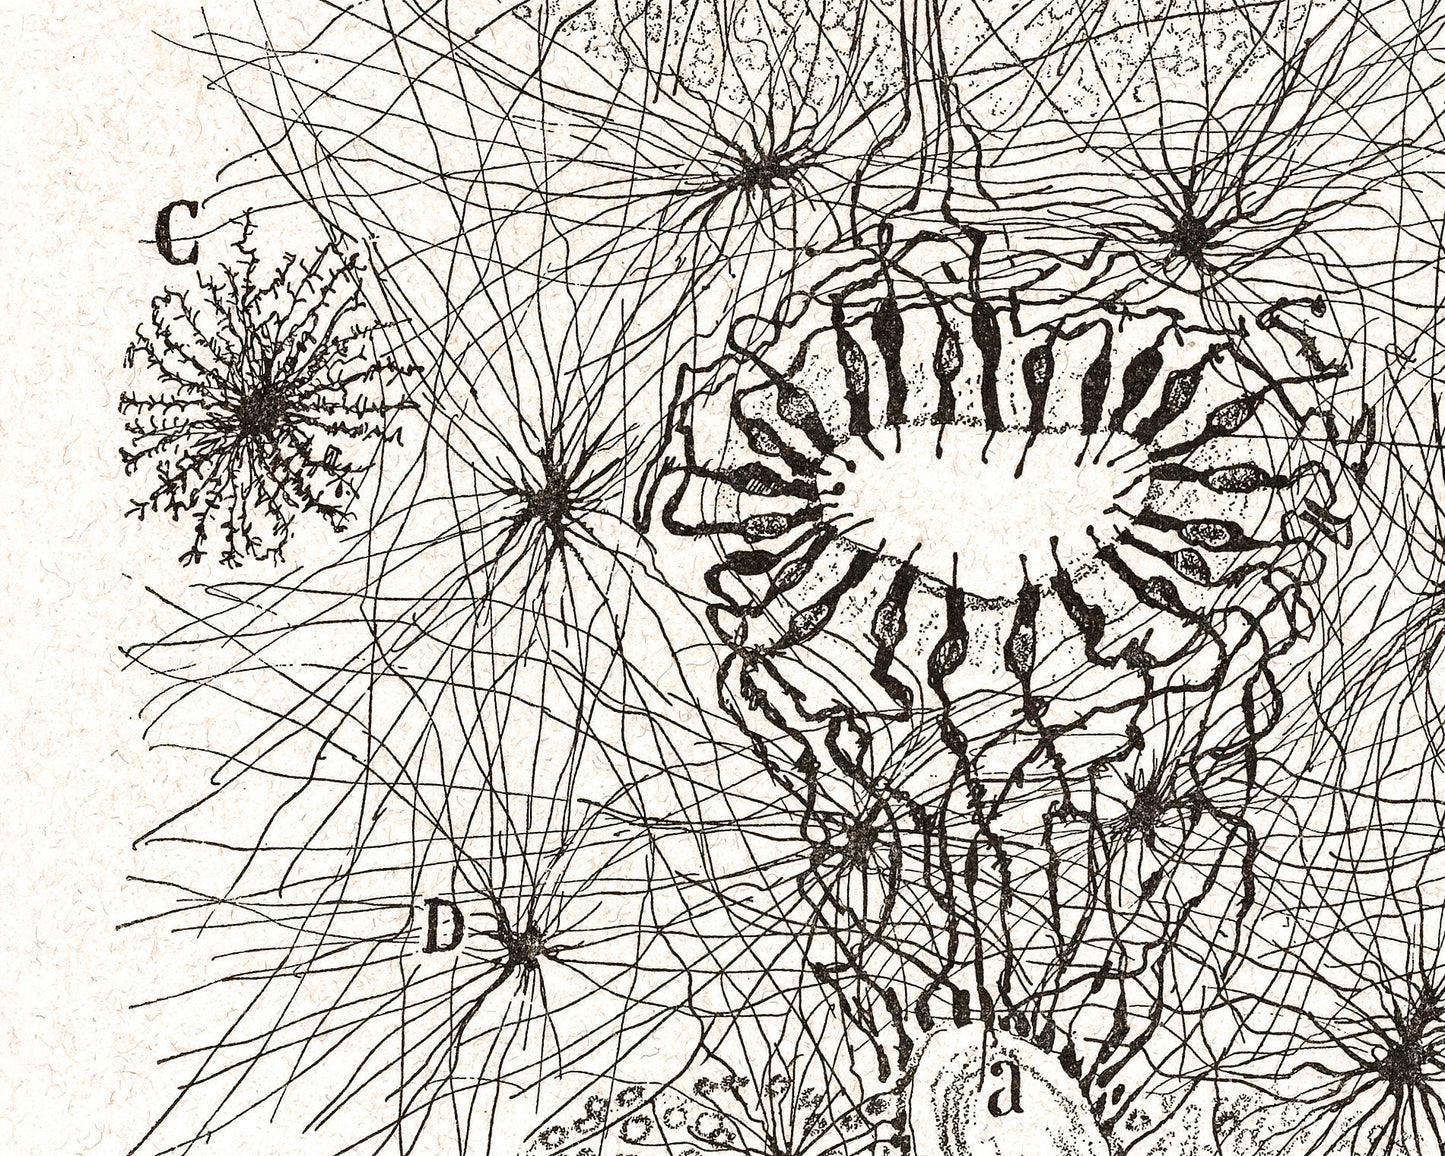 Vintage cell drawing No. 2  | Santiago Ramón y Cajal | Antique anatomical illustration | Spinal cord | Neuroscience & Biology art | Spanish artist